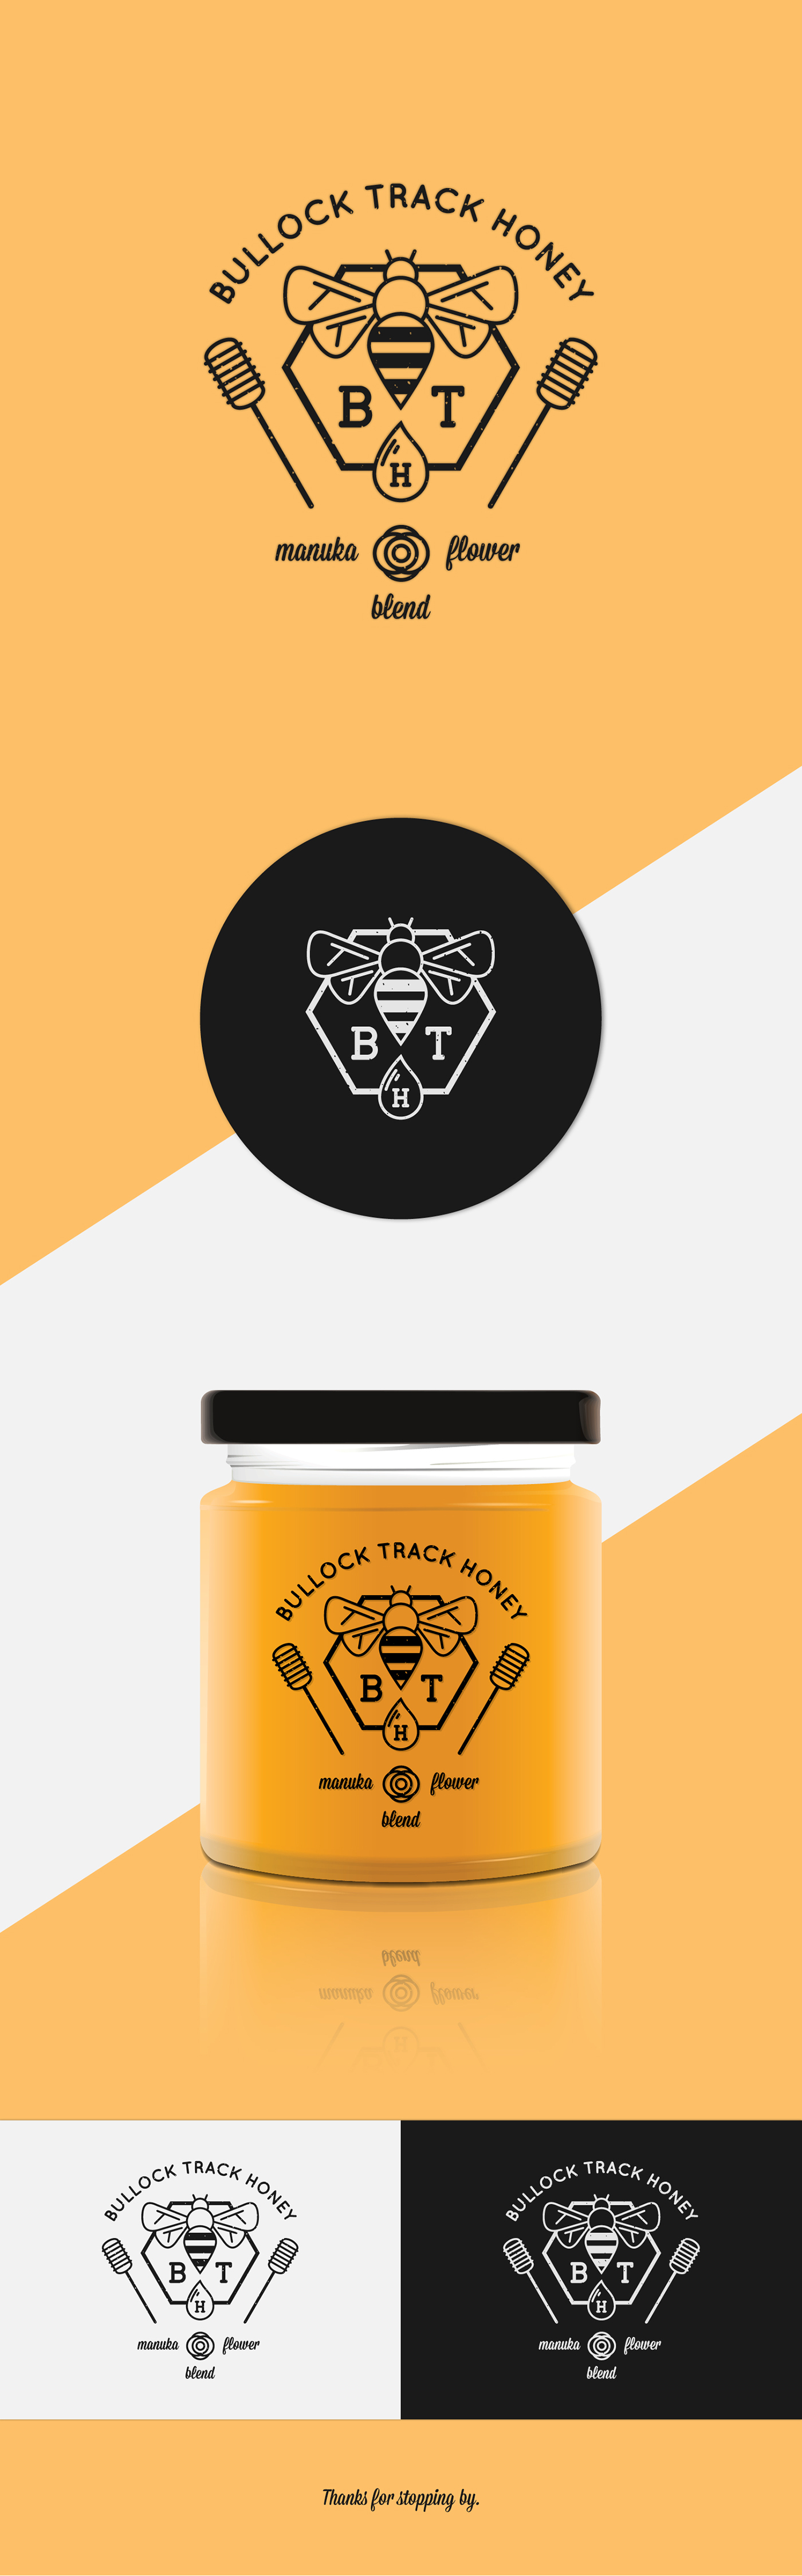 Bullock Track Honey honey logo monogram rustic Bullock track type Line Work Manuka bee honey comb honey dipper manuka flower